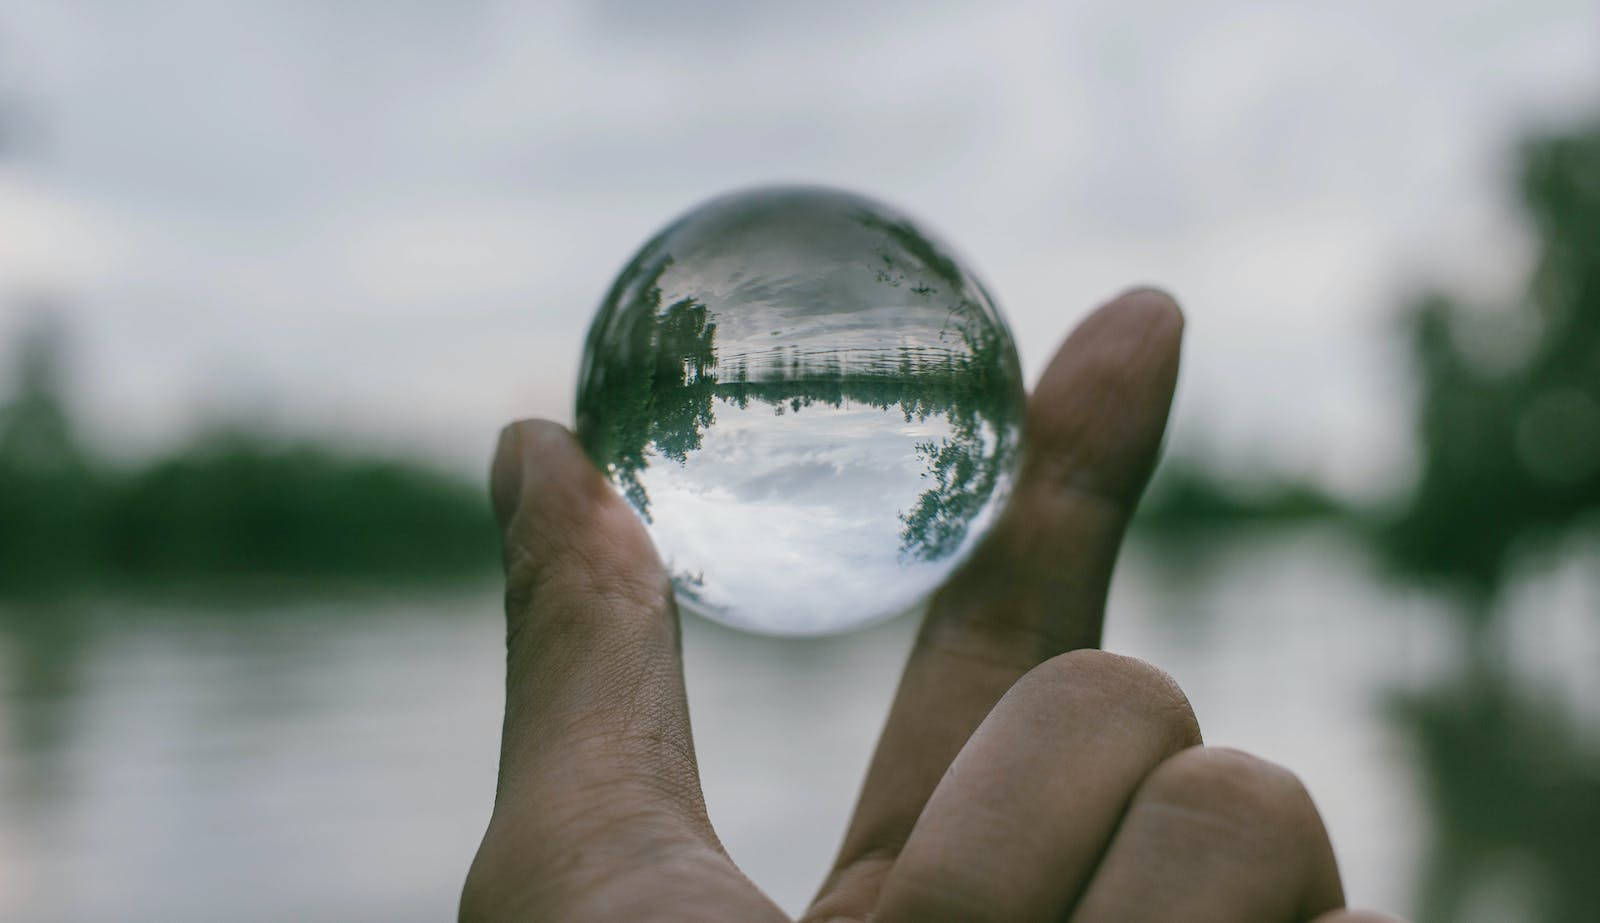 Transparent Crystal Ball